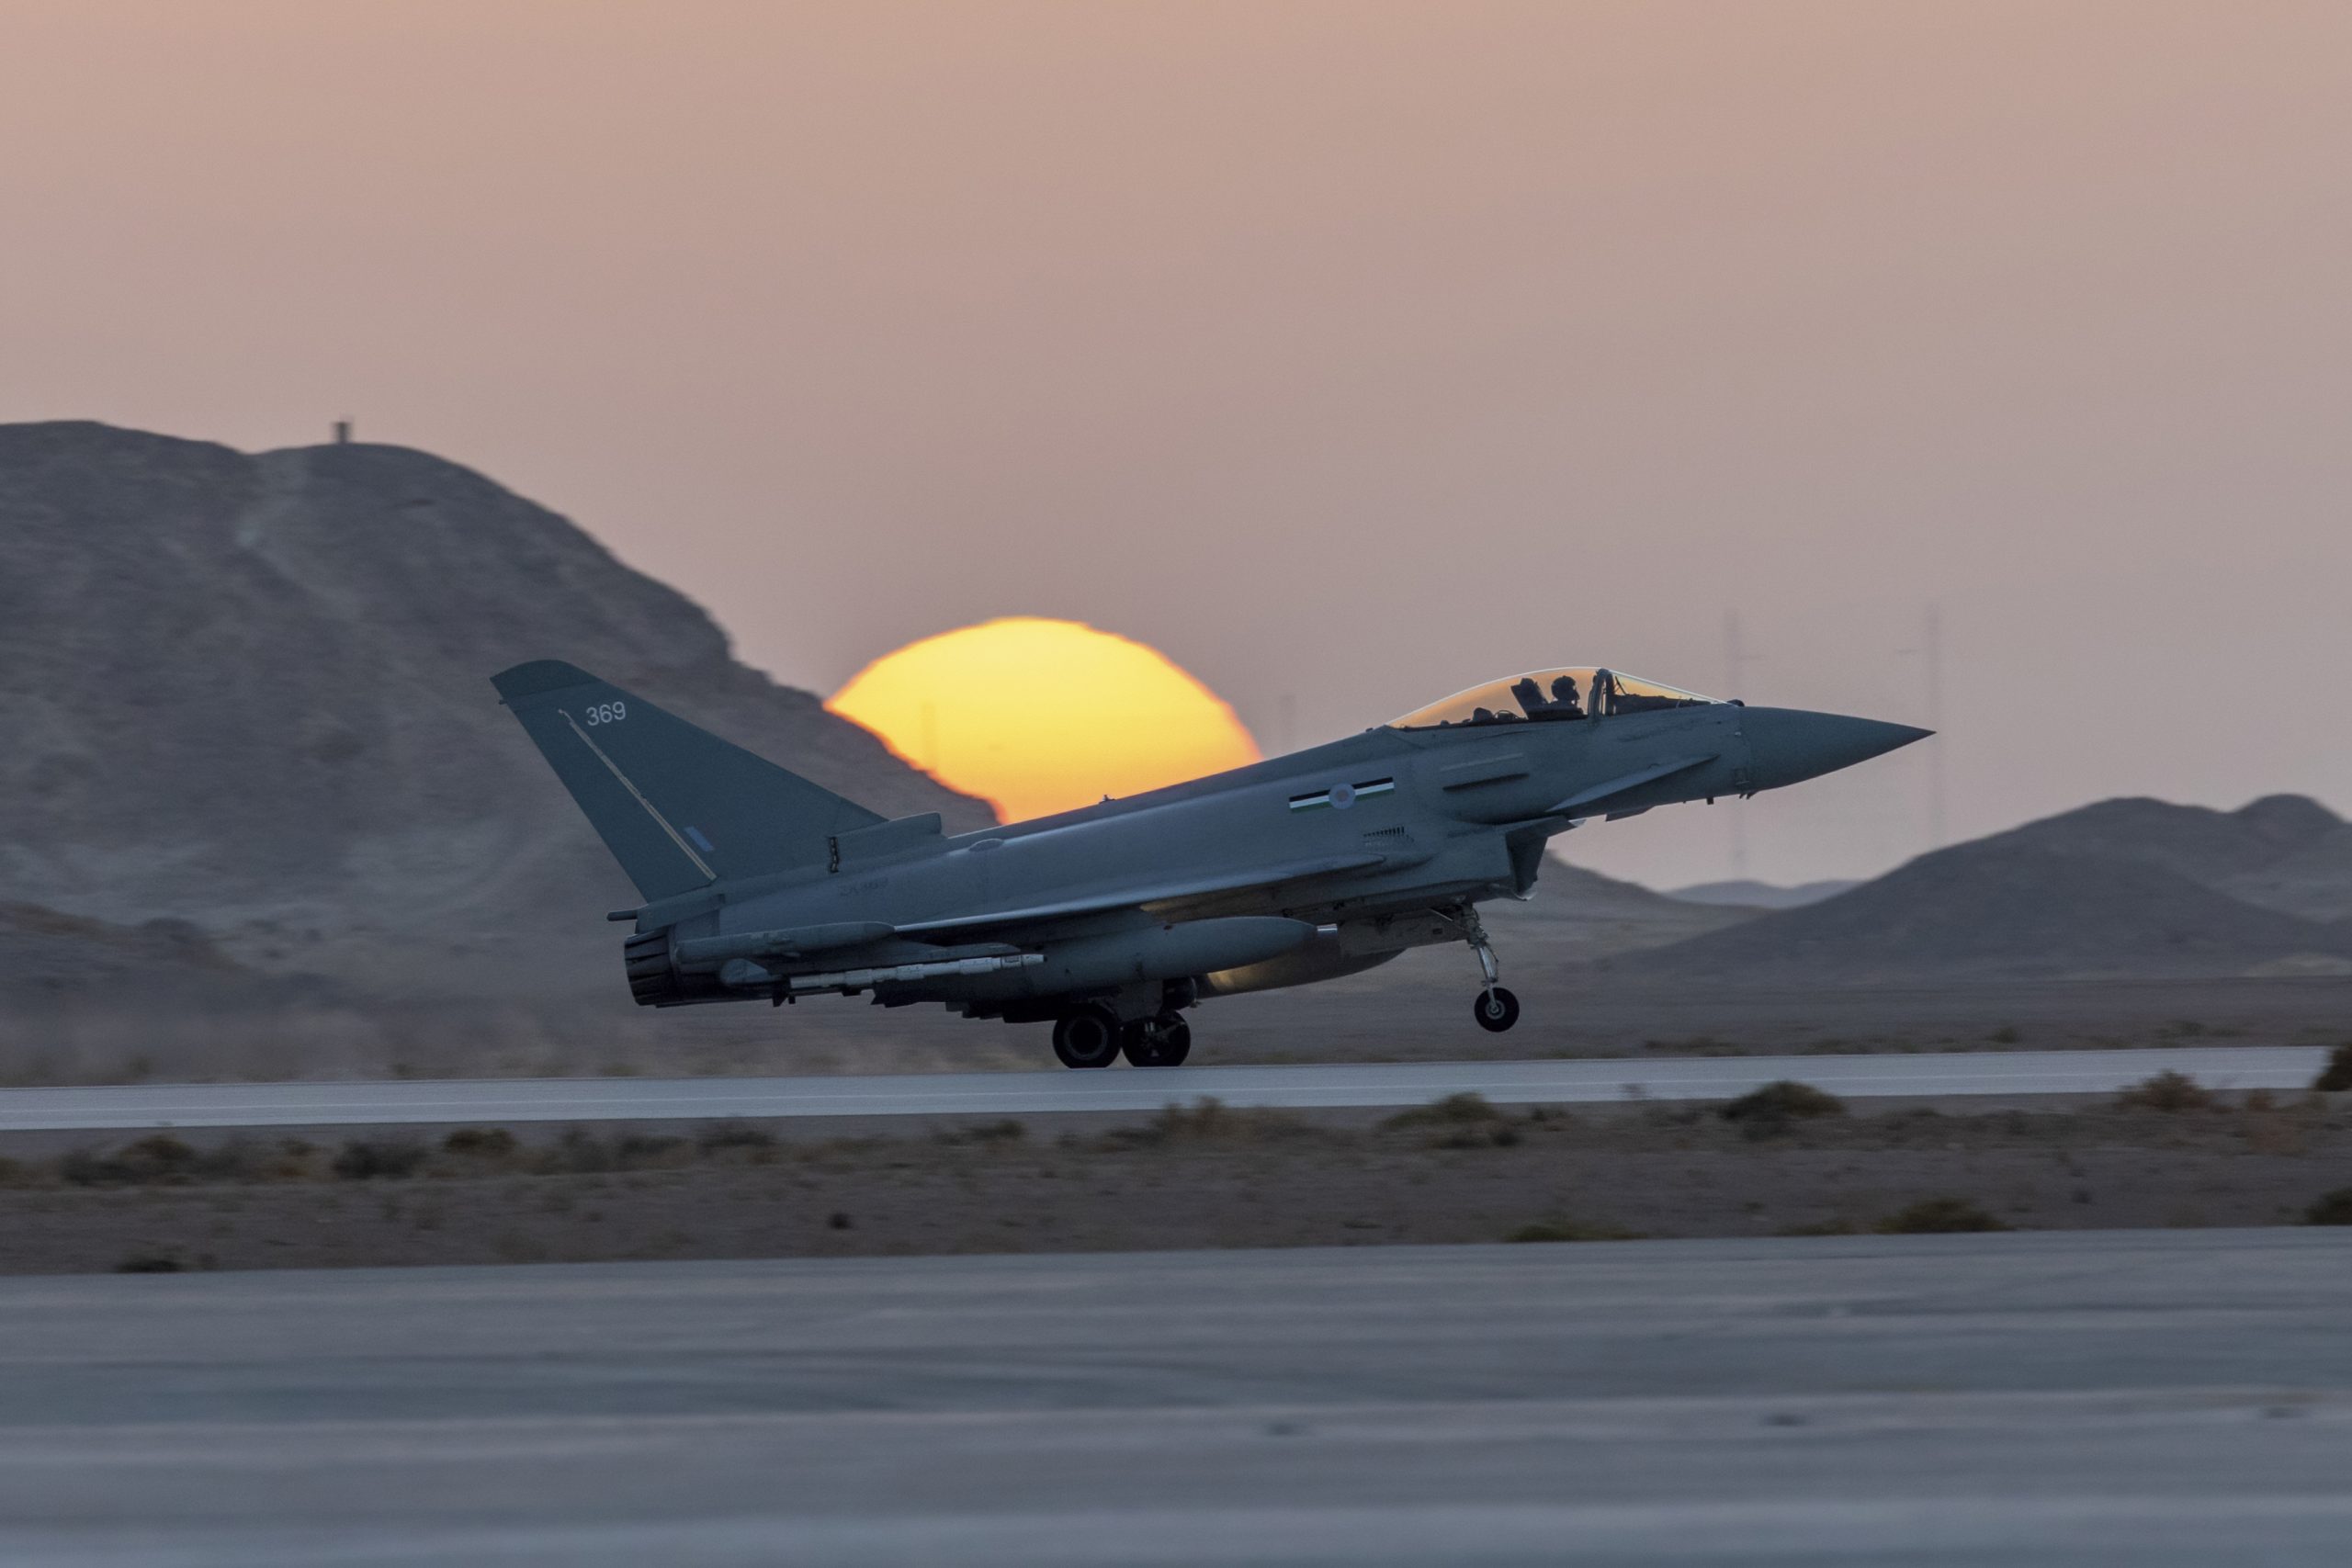 Royal Air Force Jets Arrive In Oman For Major Desert Exercise